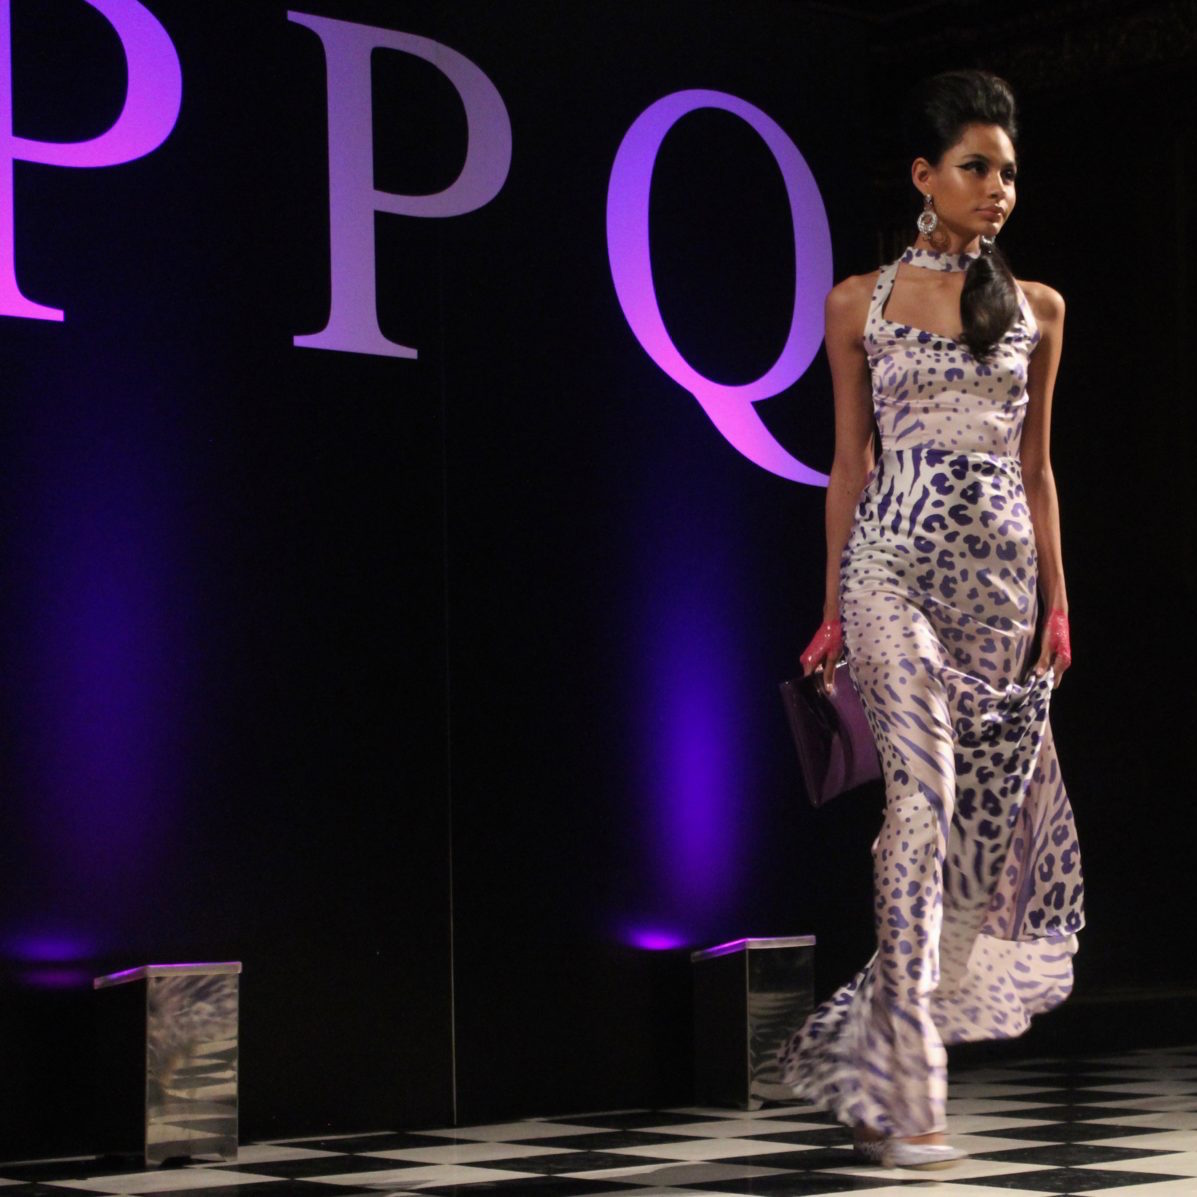 PPQ at London Fashion Week